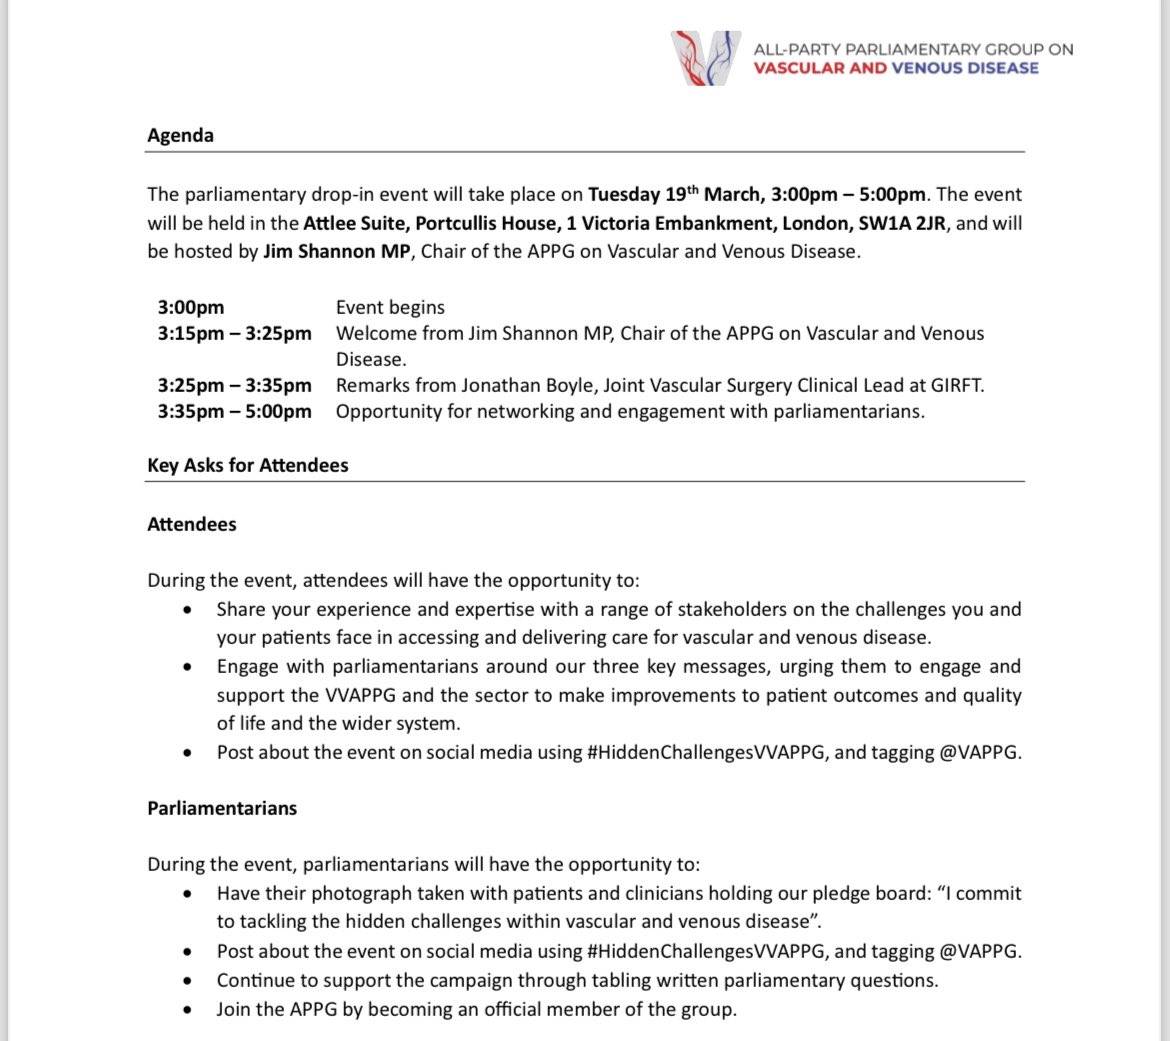 Heading to ⁦@UKParliament⁩ to discuss ⁦@NHSGIRFT⁩ #Vascular priorities with@JimShannonMP ⁦@VAPPG⁩ ⁦@VSGBI⁩ ⁦@BSETnews⁩ ⁦@rebellvascular⁩